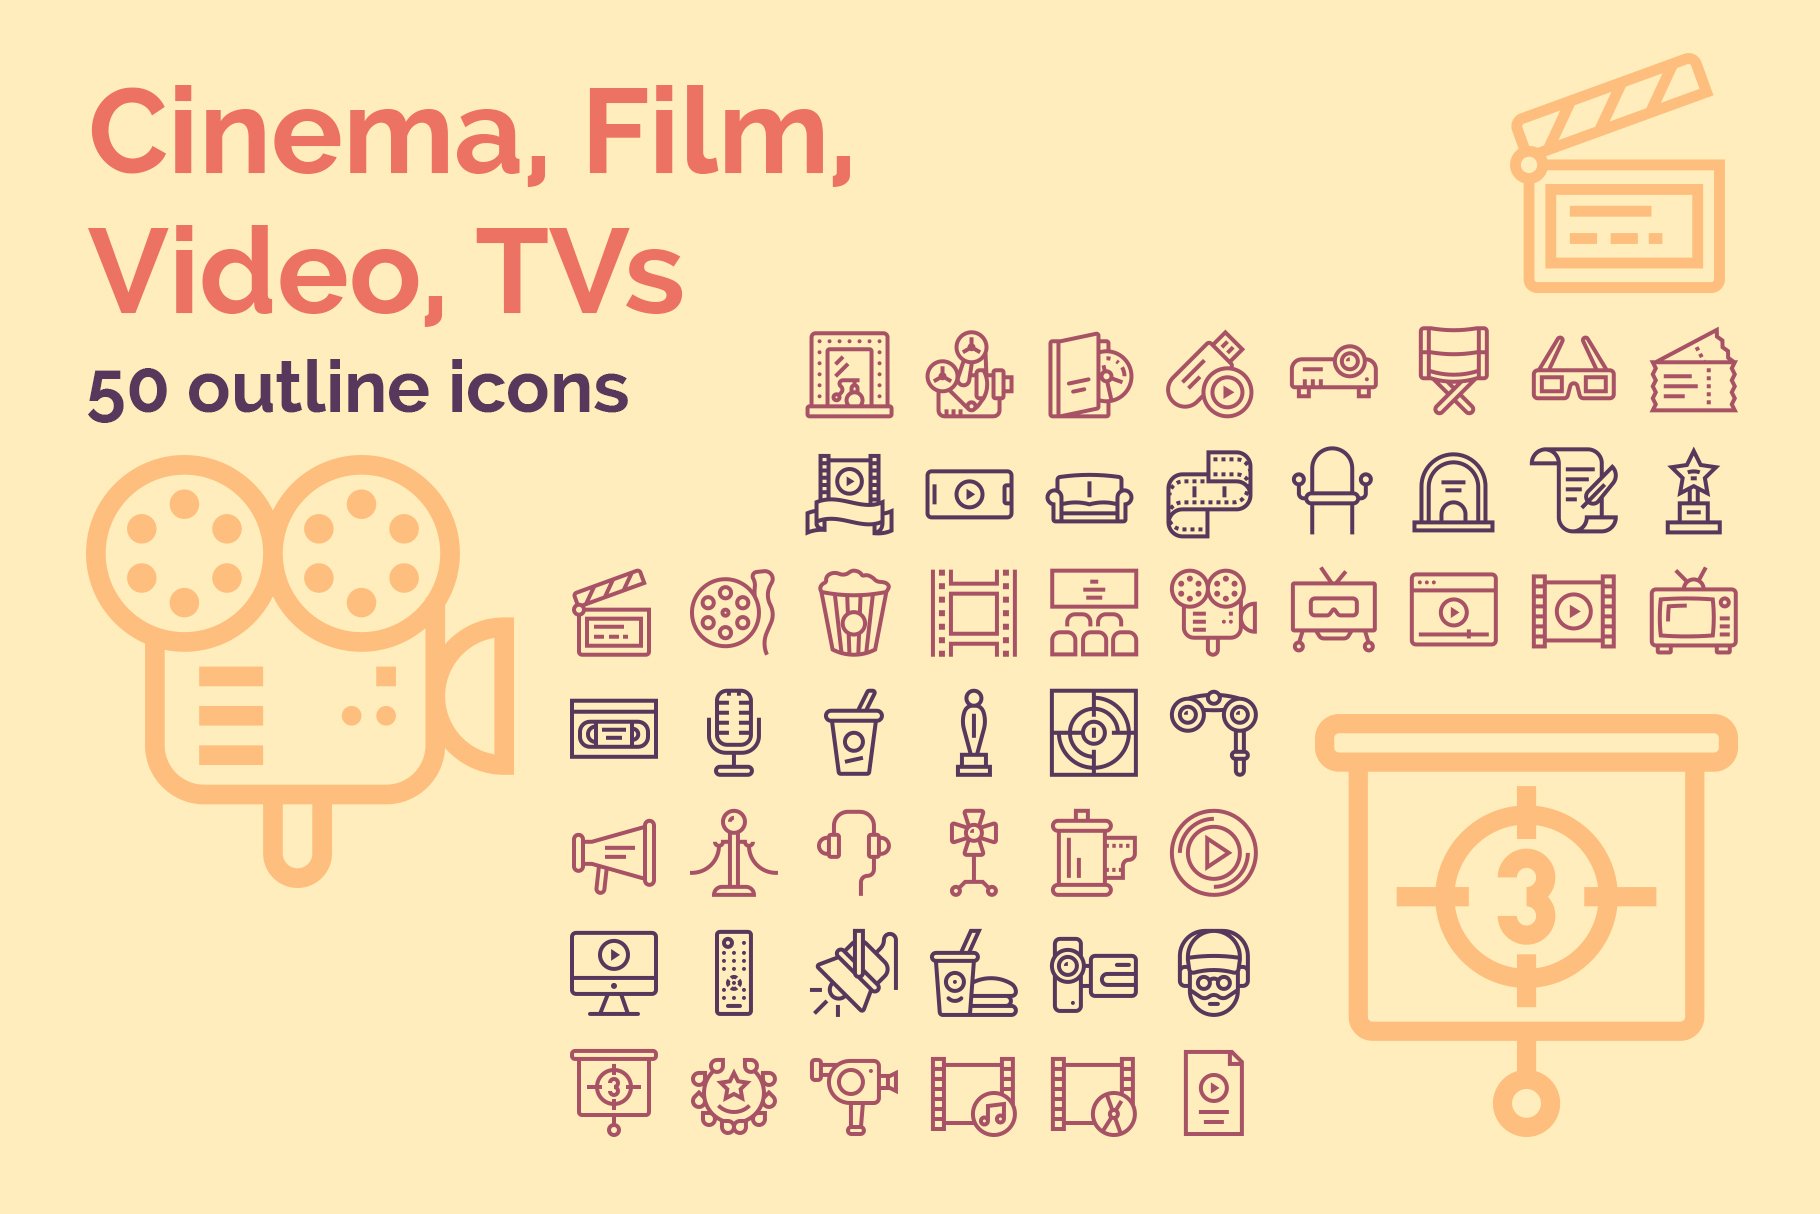 50 Icons: Cinema, Film, Video, TV cover image.